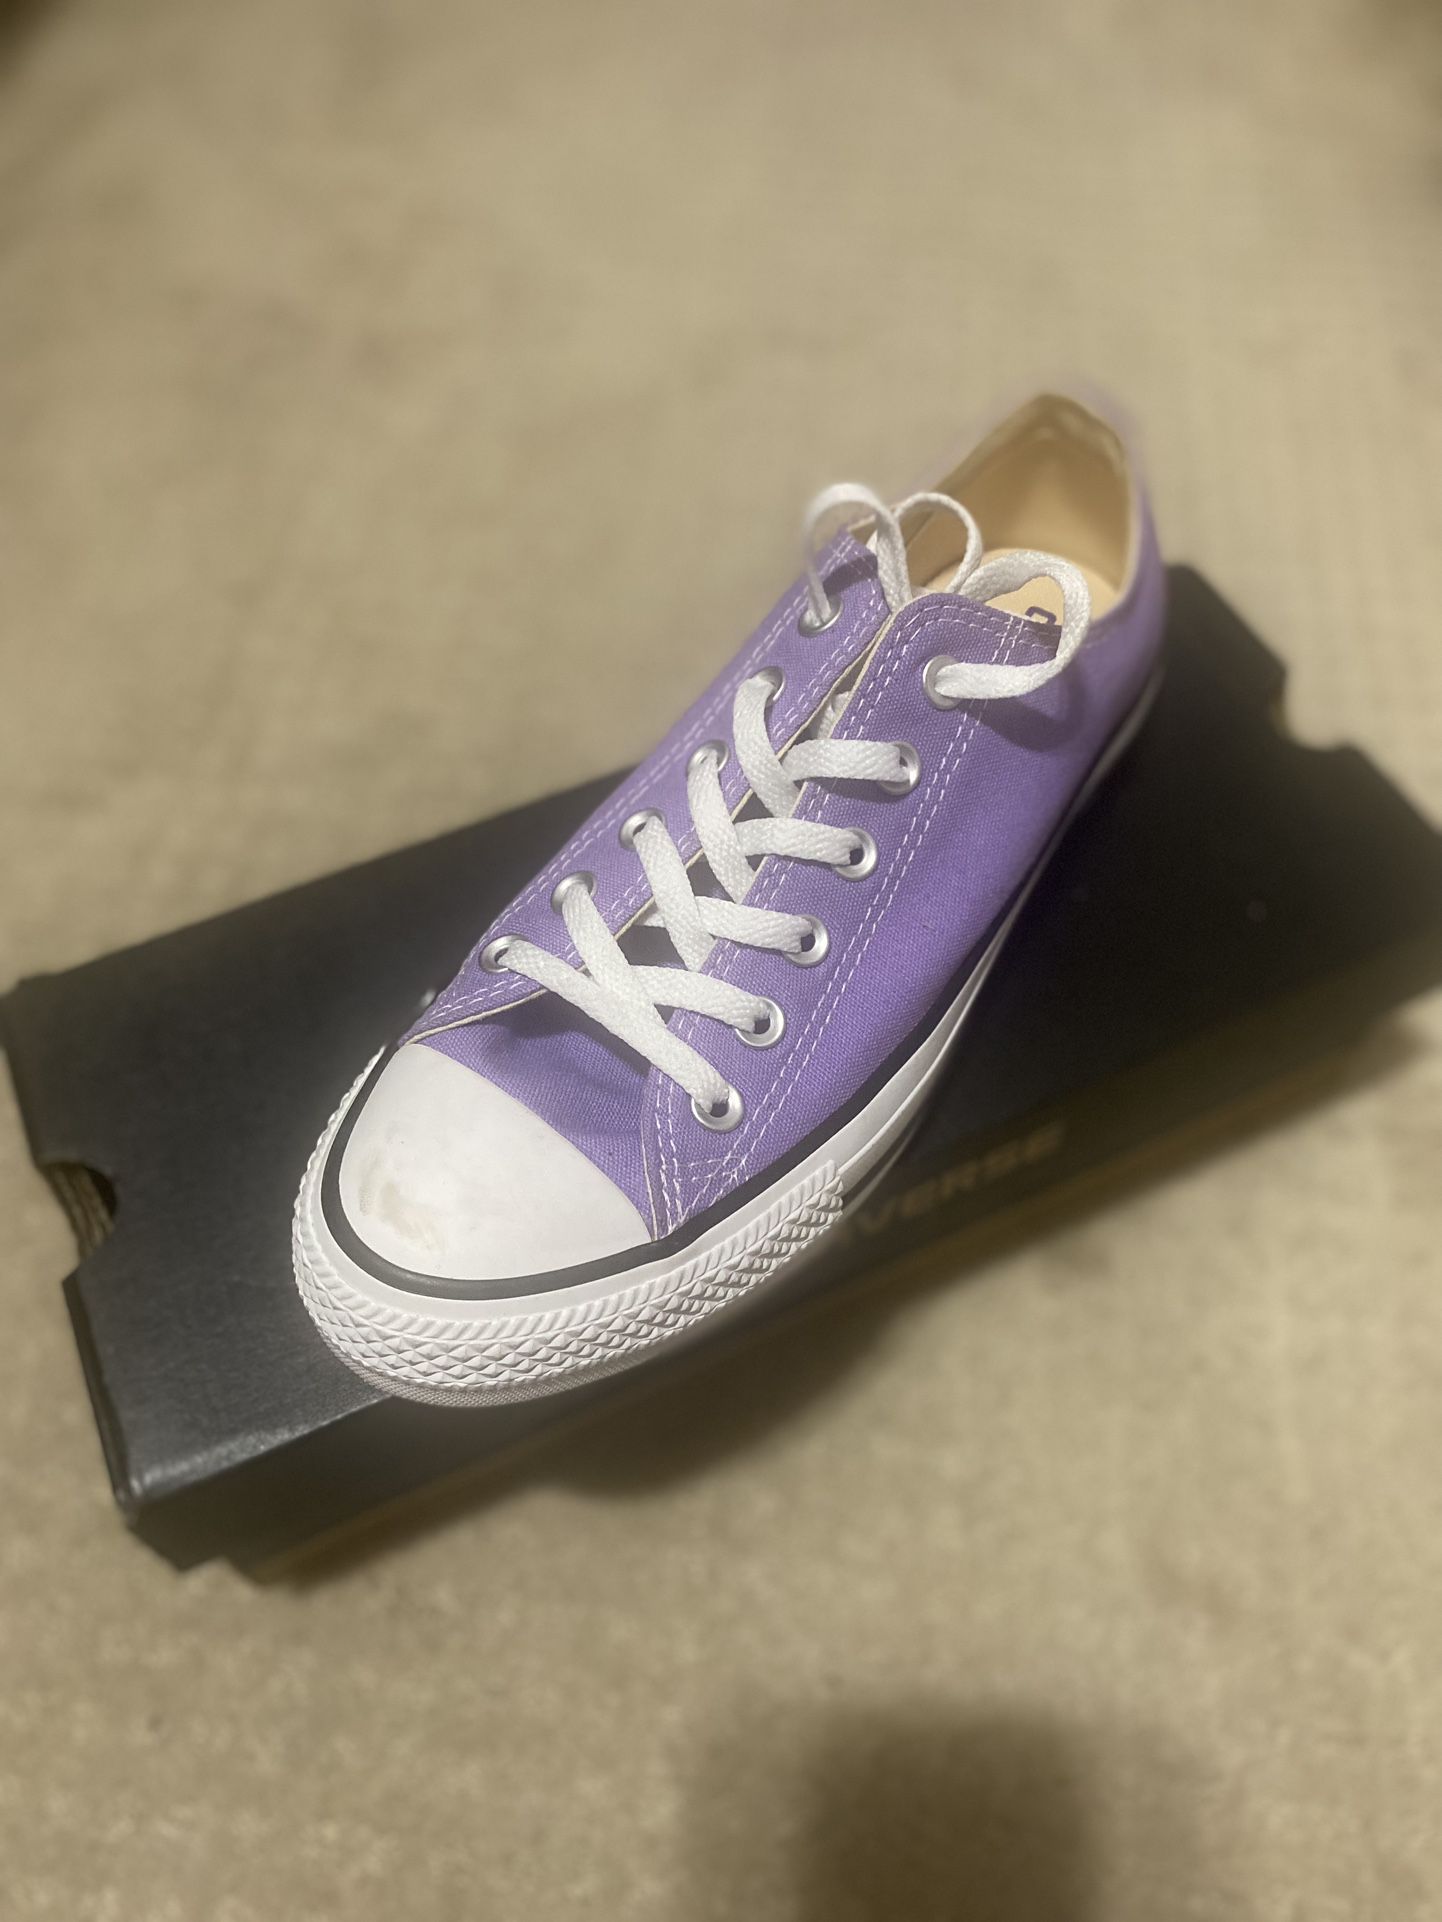 Light Mid Purple Converse